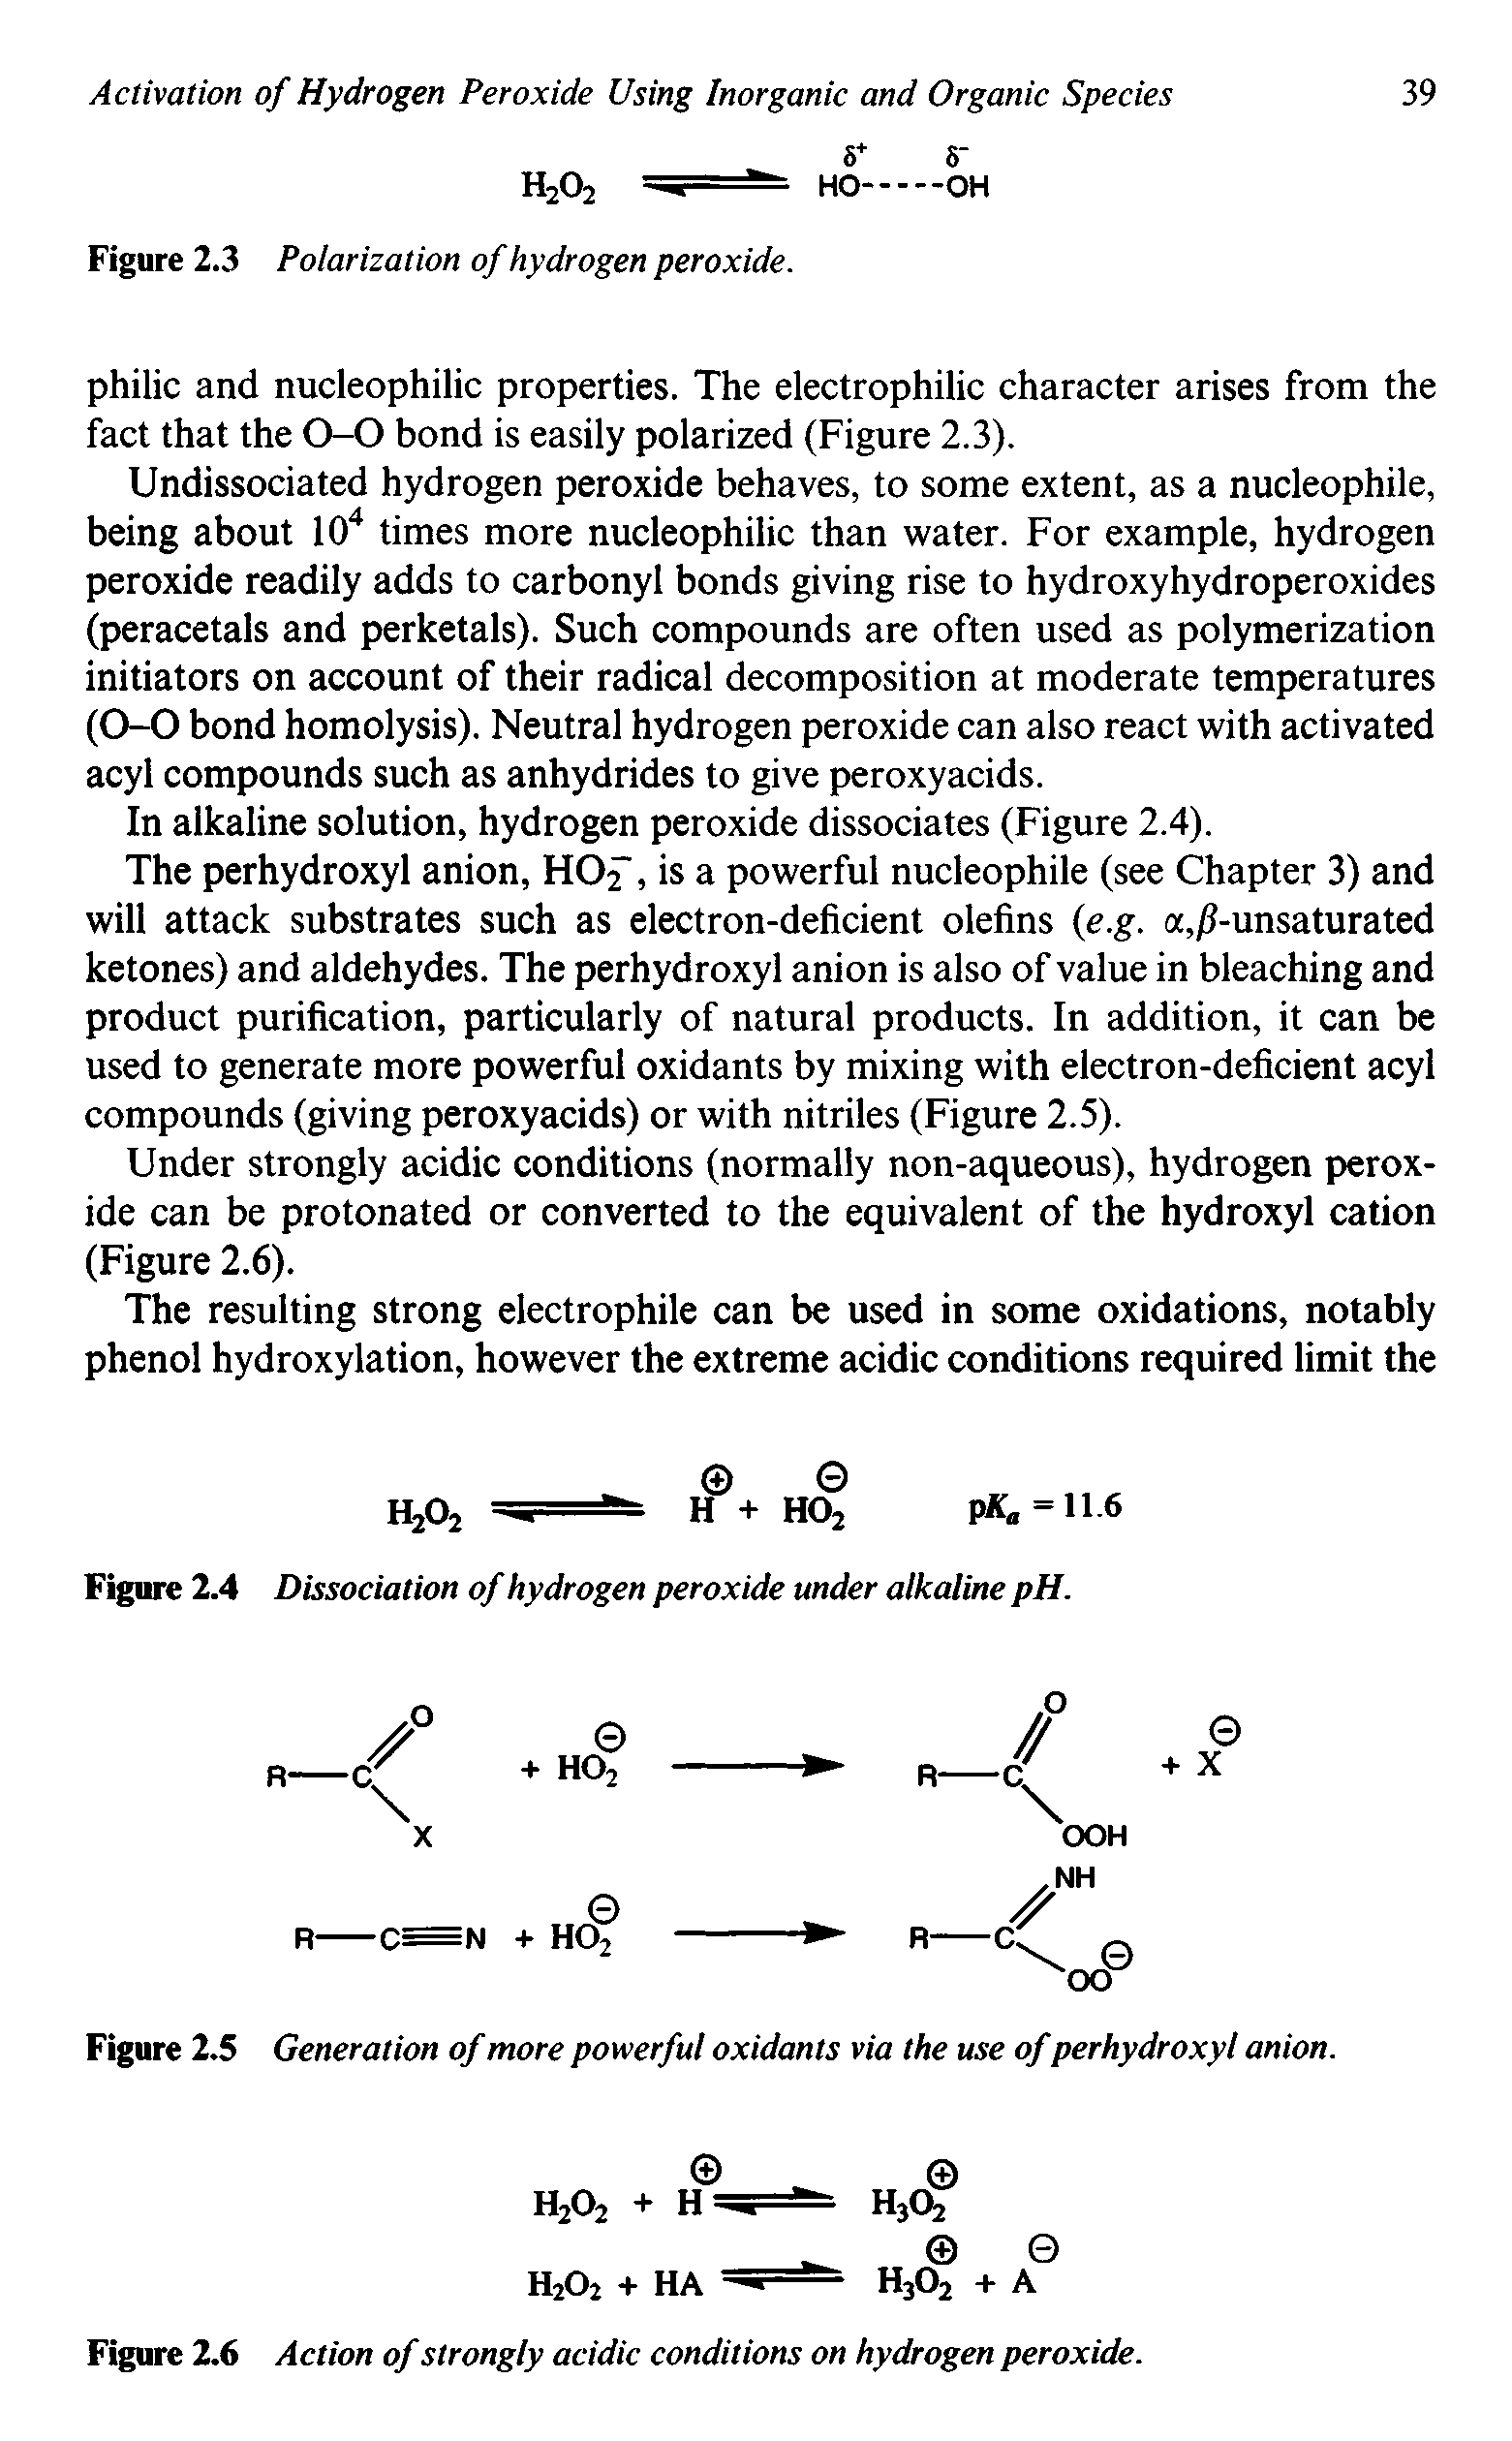 Figure 2.4 Dissociation of hydrogen peroxide under alkaline pH.